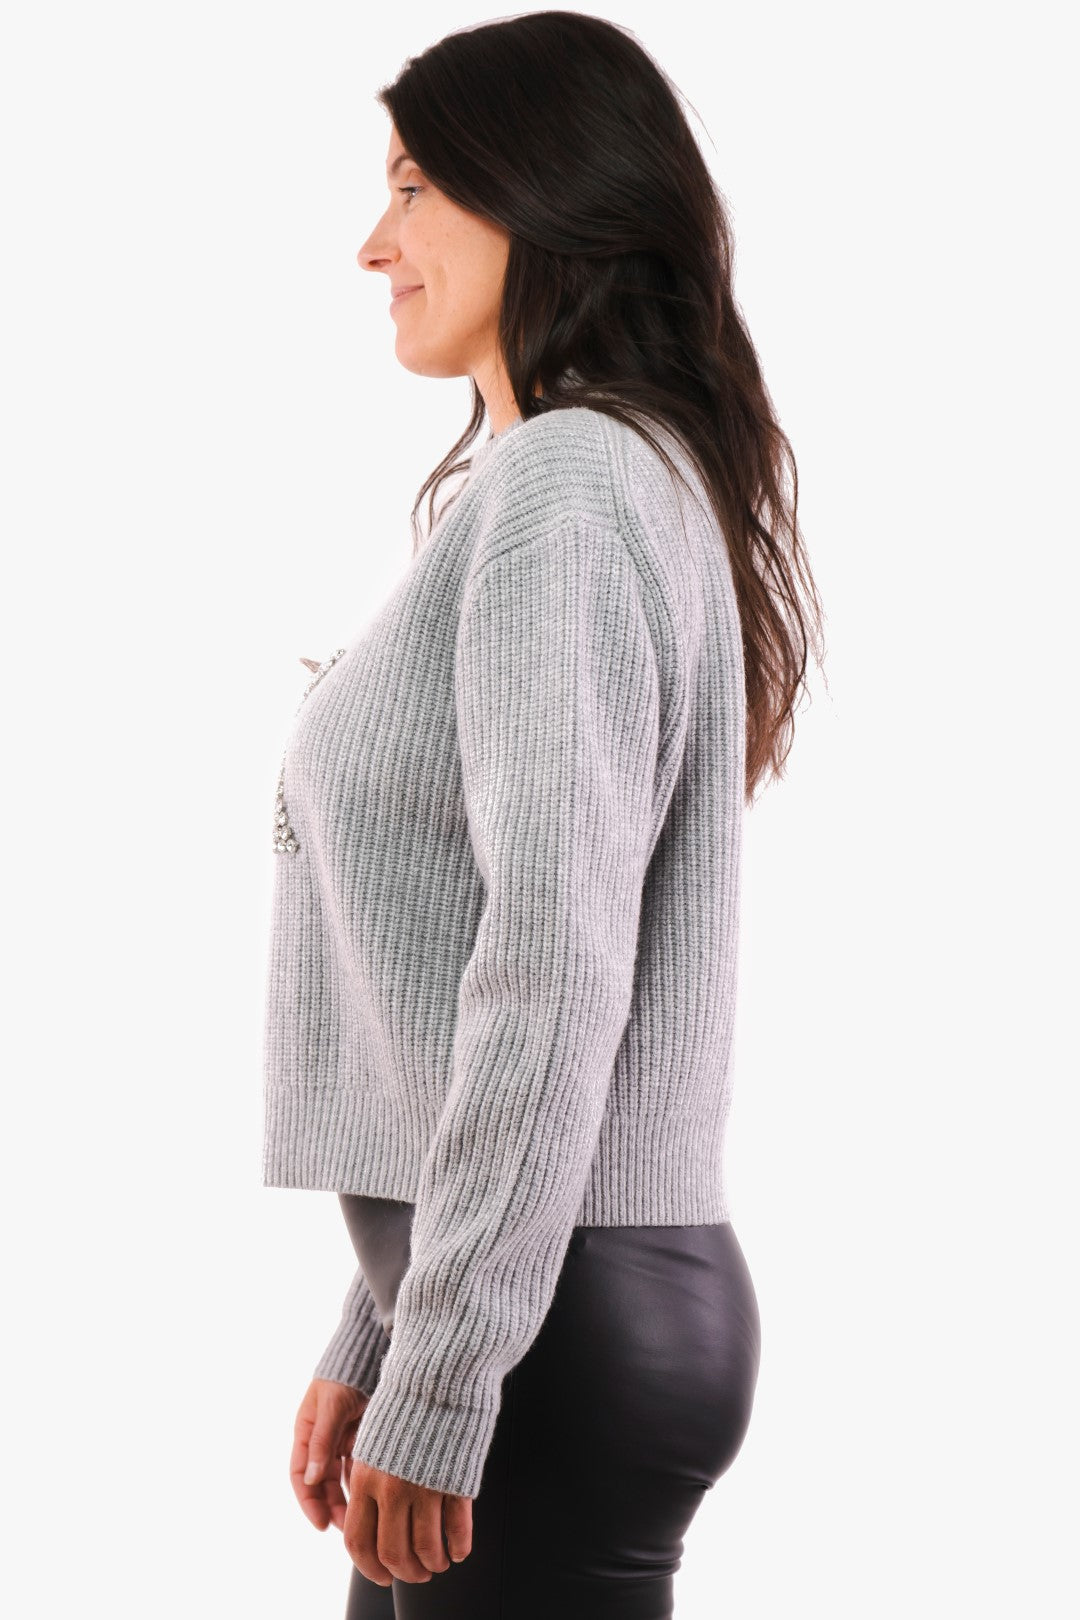 Gray Michael Kors sweater